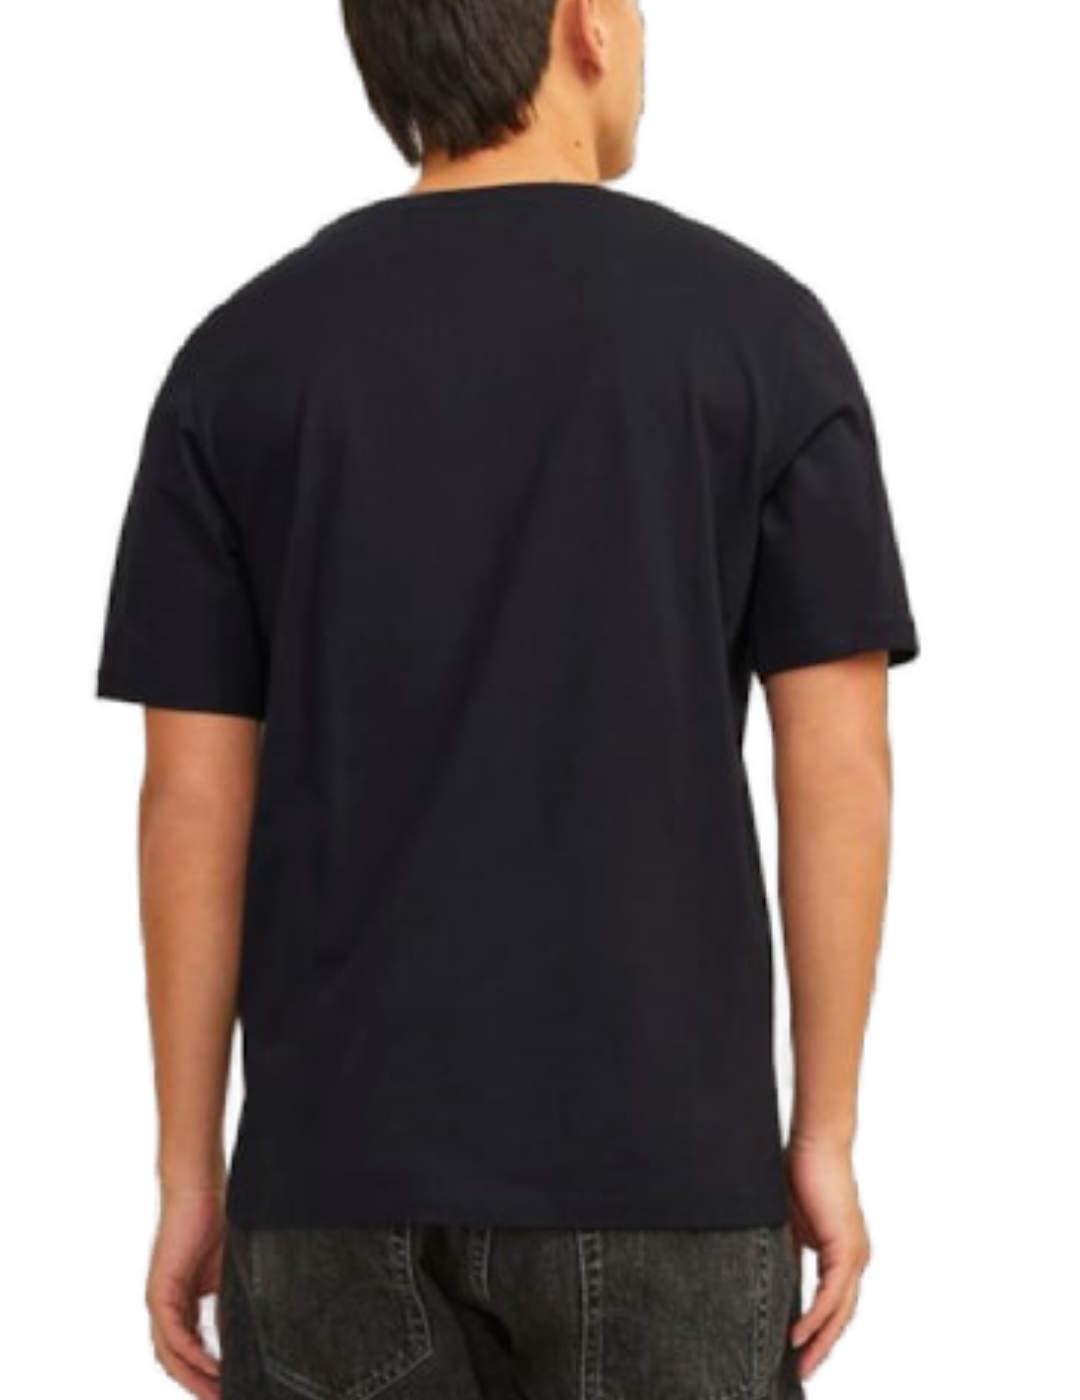 Camiseta Jack&Jones Logo negra manga corta para hombre